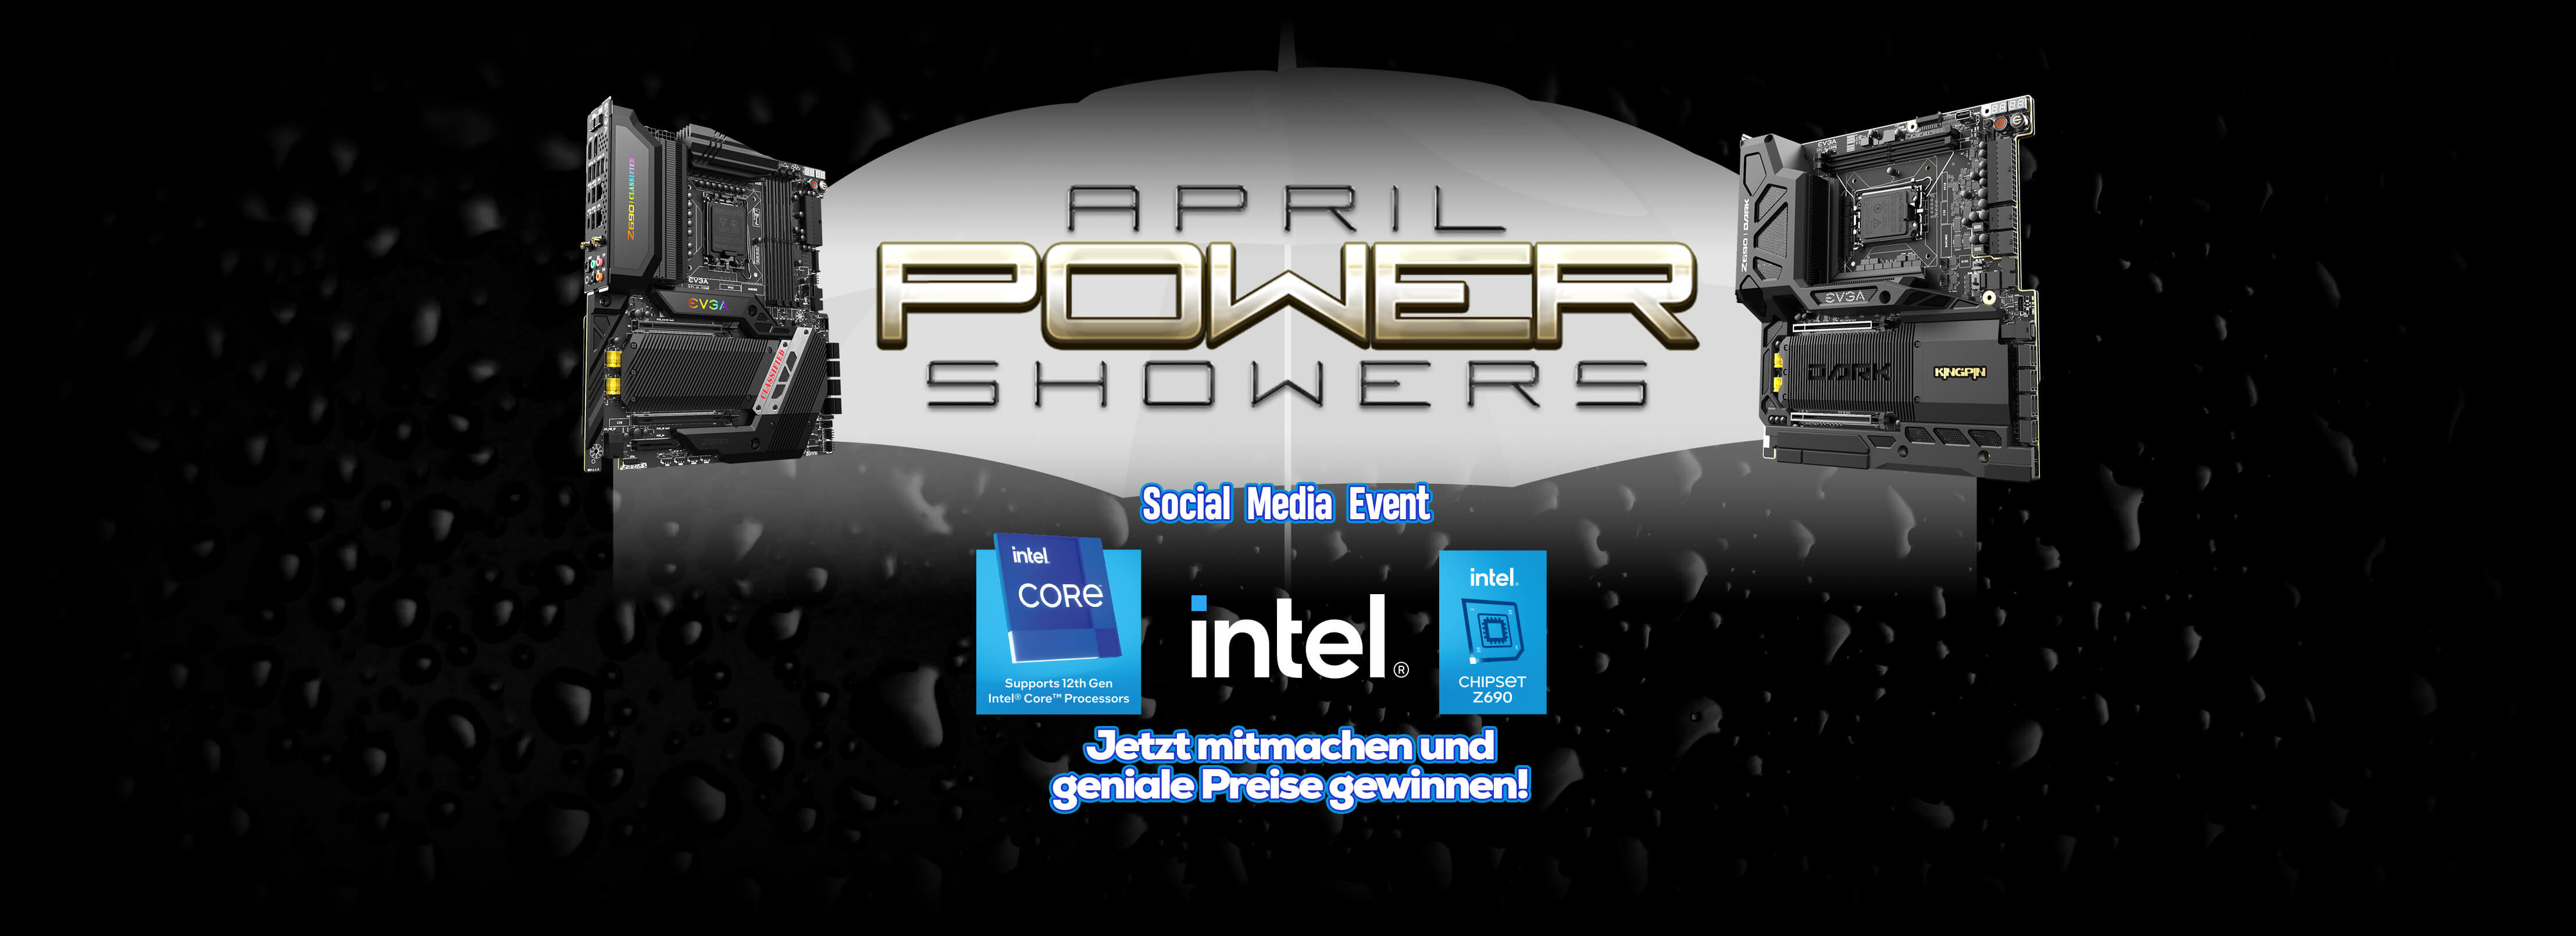 April Power Showers Social Media Event